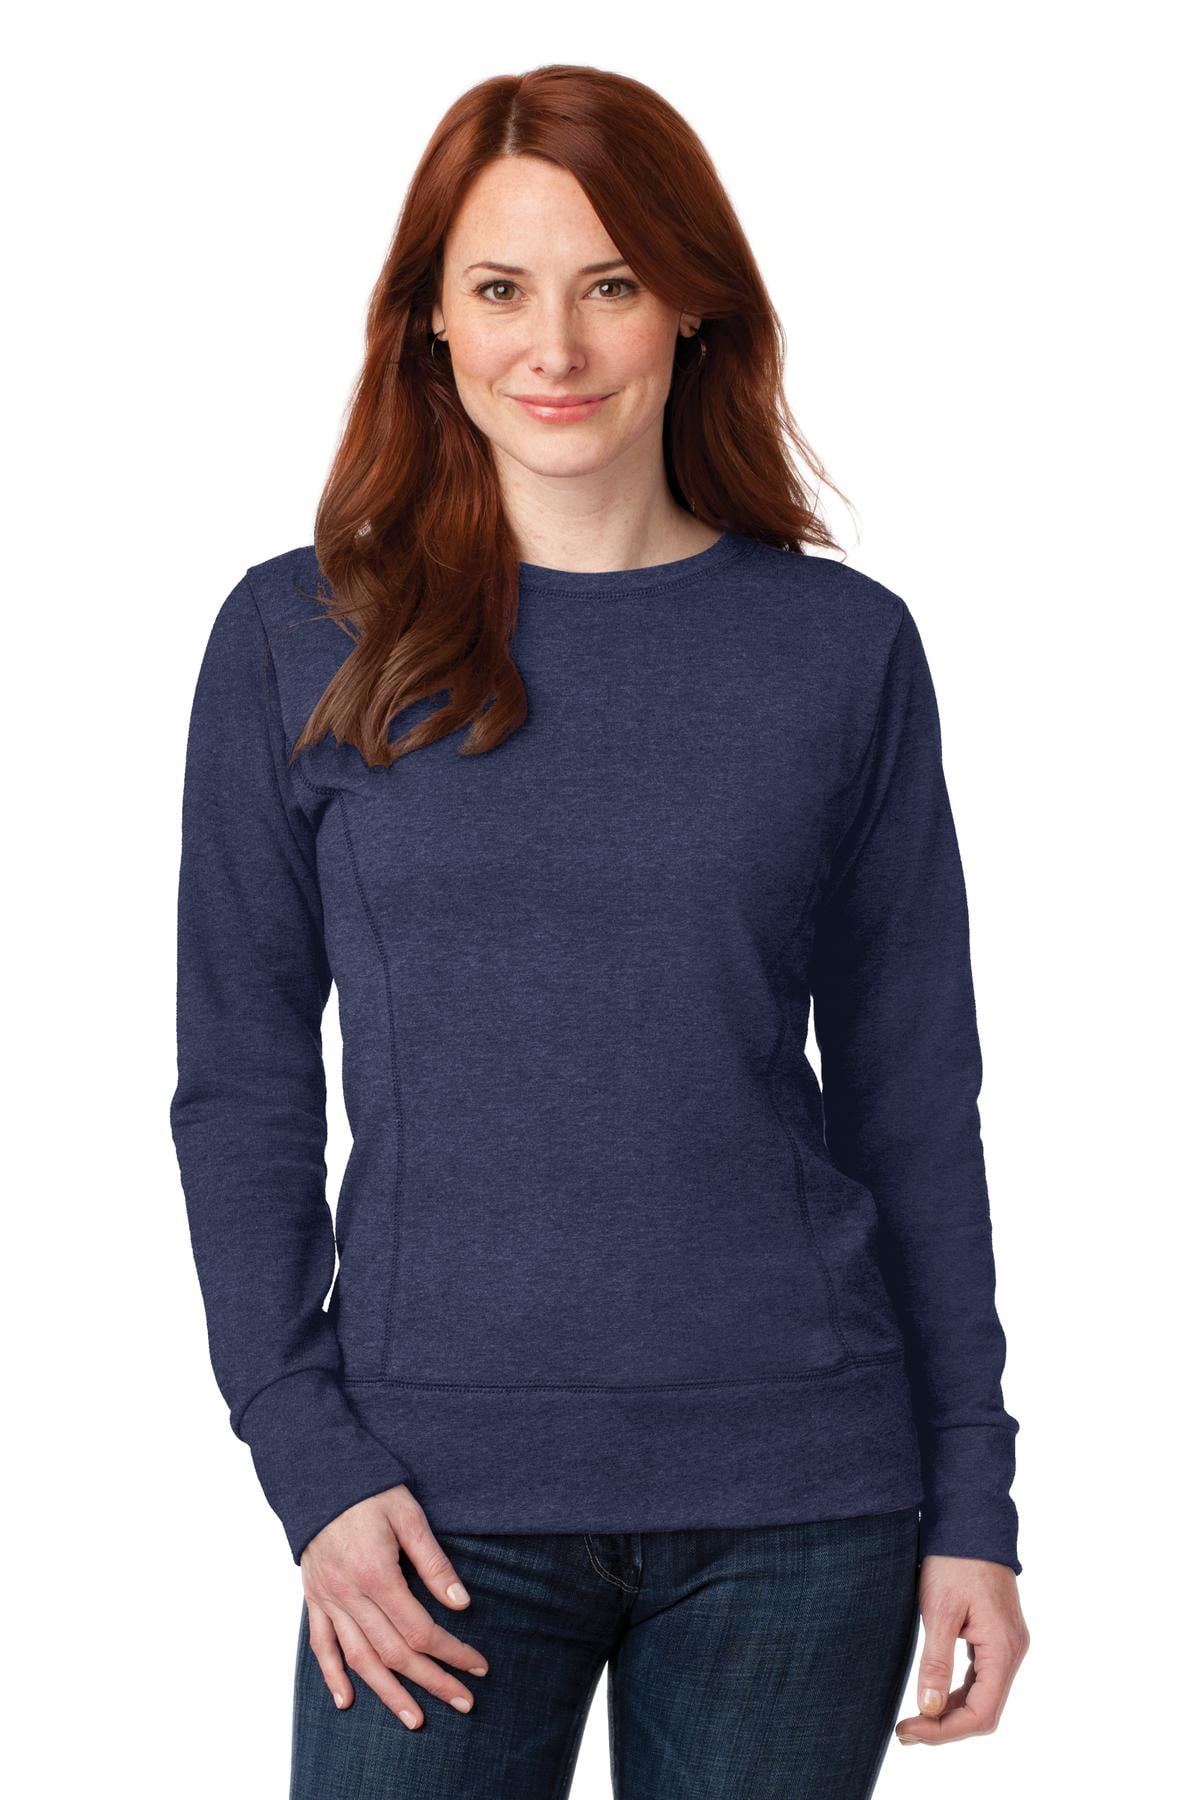 Anvil Women's Three Needle Top Stitch Mid Scoop Sweatshirt - Walmart.com